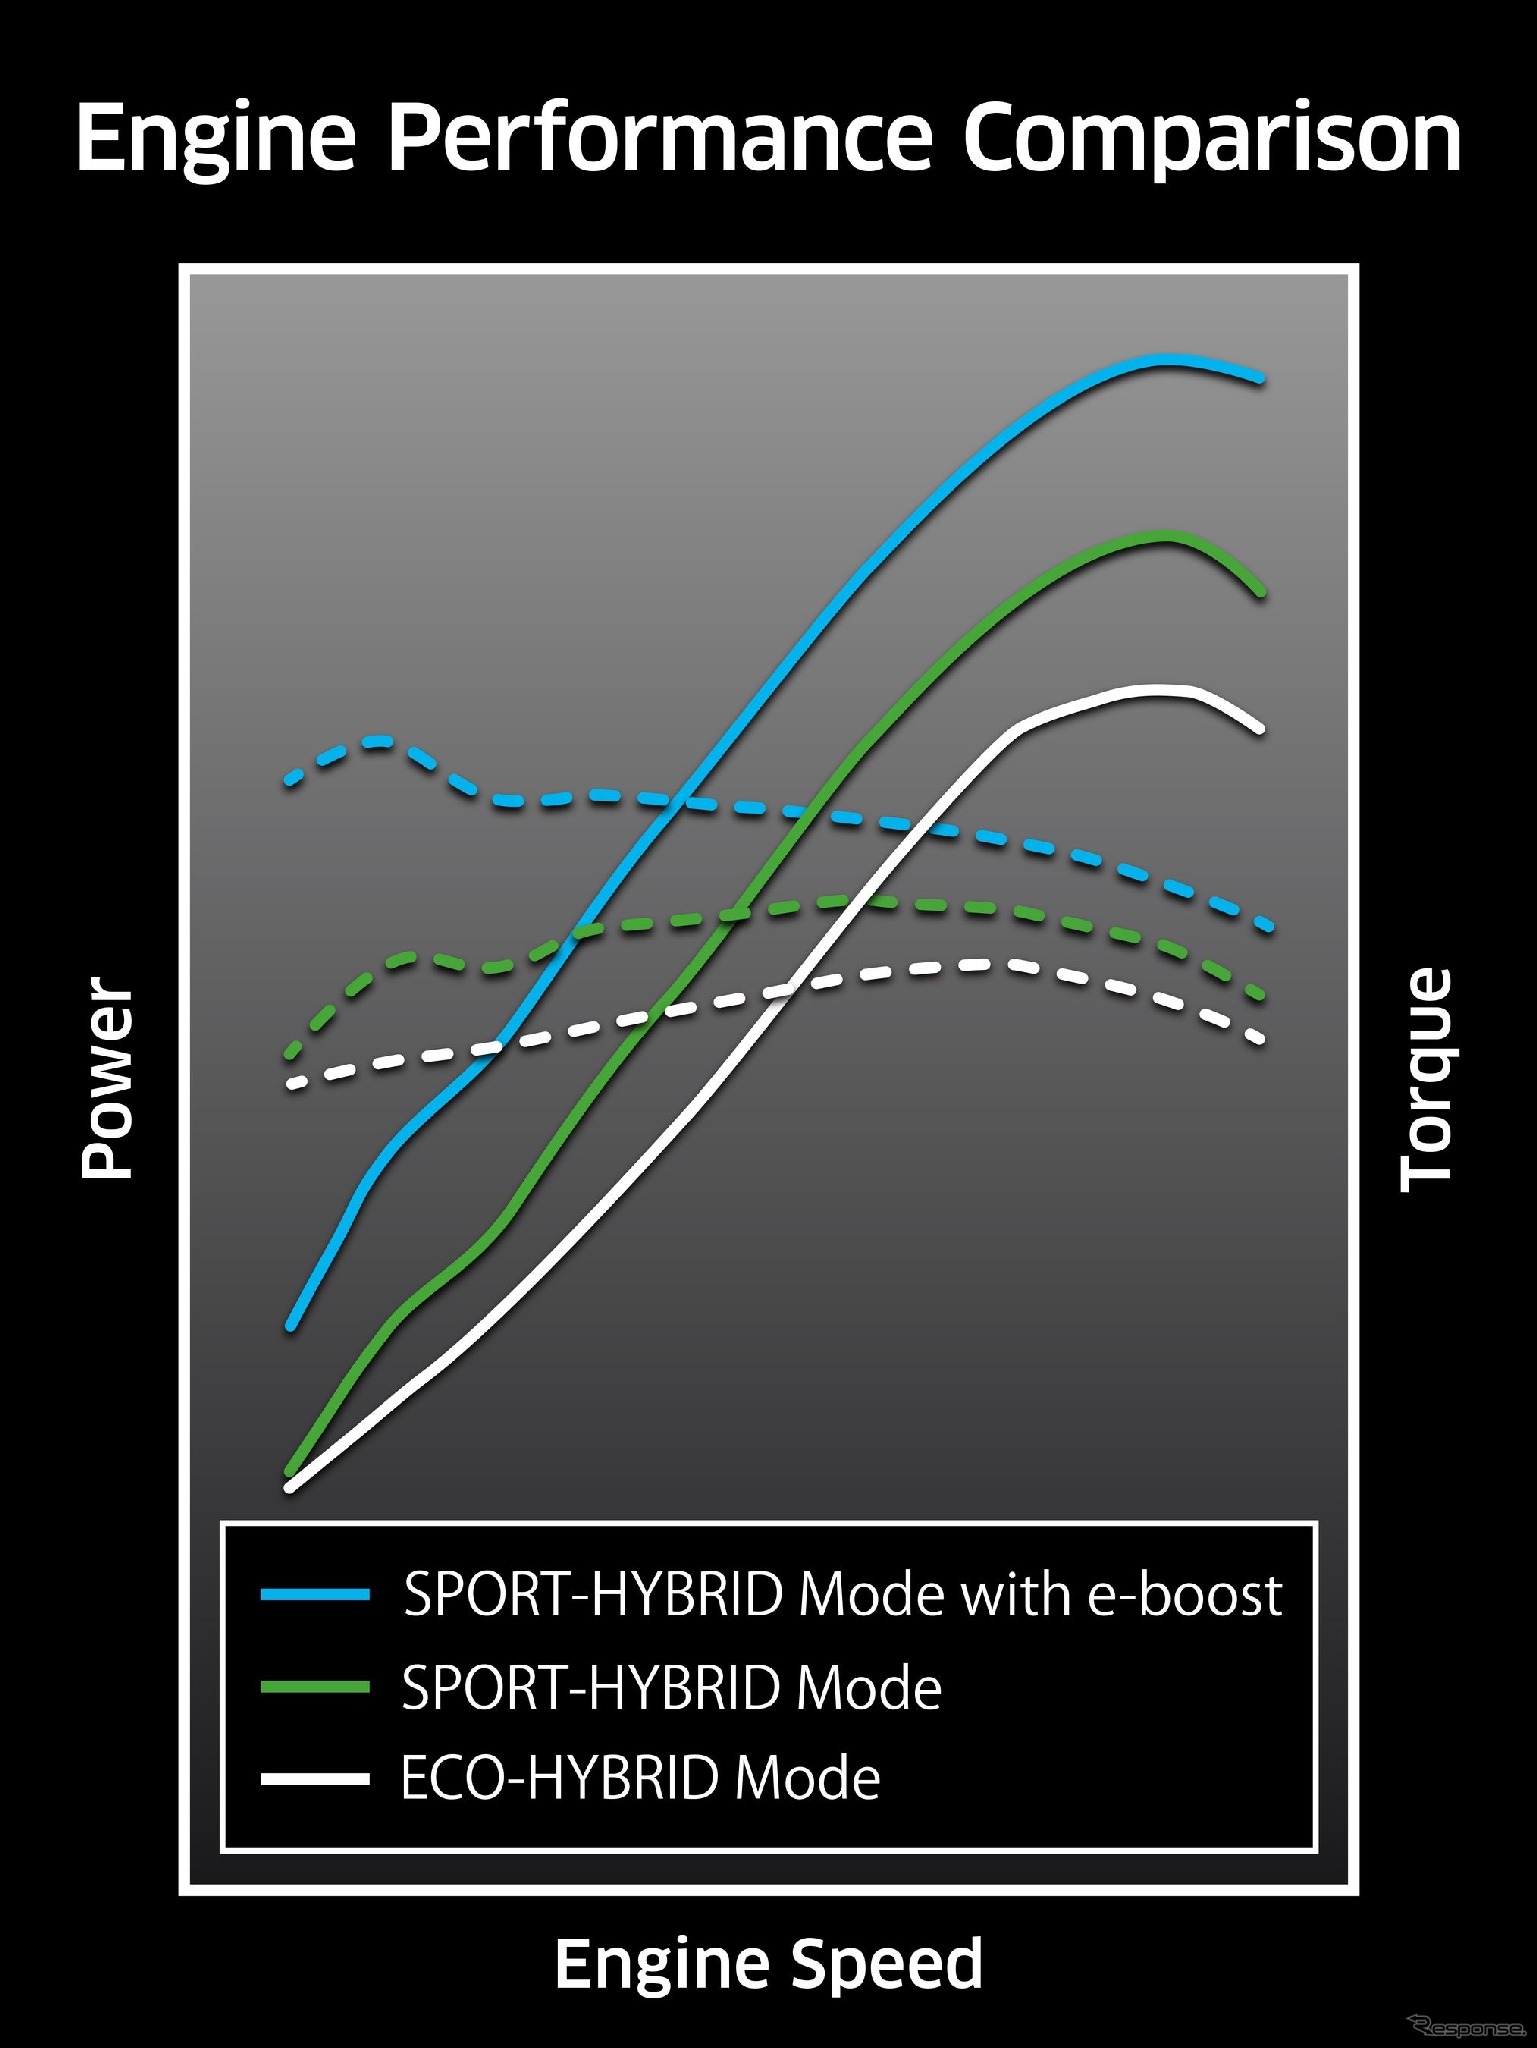 SPORT-HYBRID走行時、瞬時の加速を要するときなどに5秒間使用できる「e-boost」